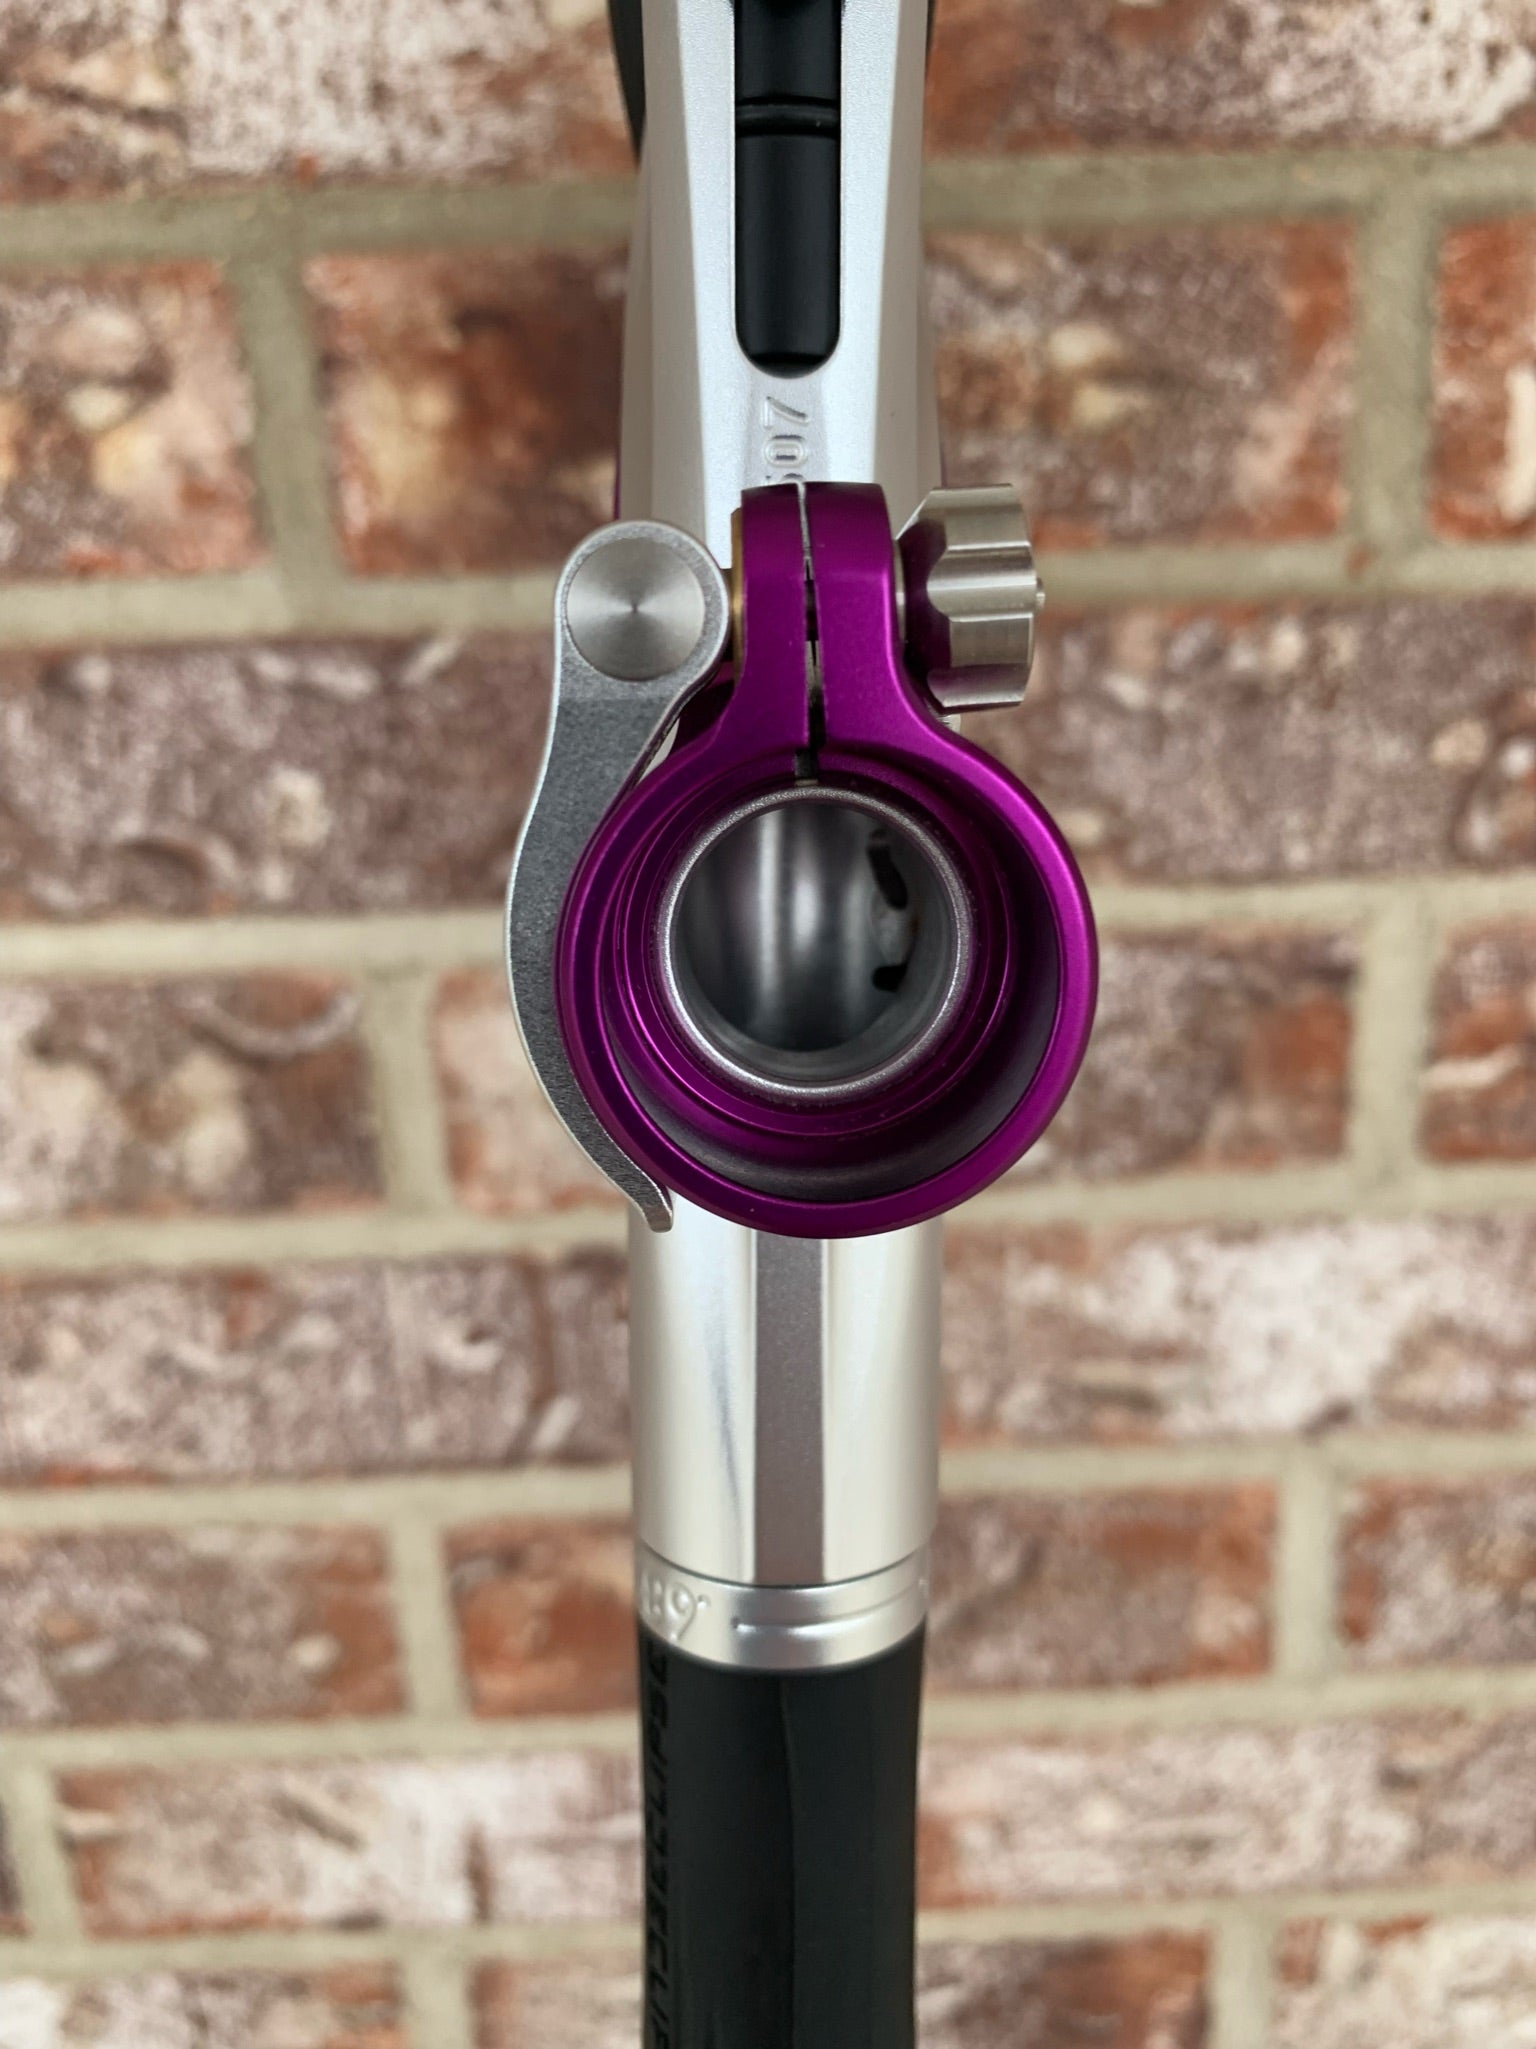 Used Planet Eclipse LV1.6 Paintball Gun - Amethyst (Black / Purple) –  Punishers Paintball